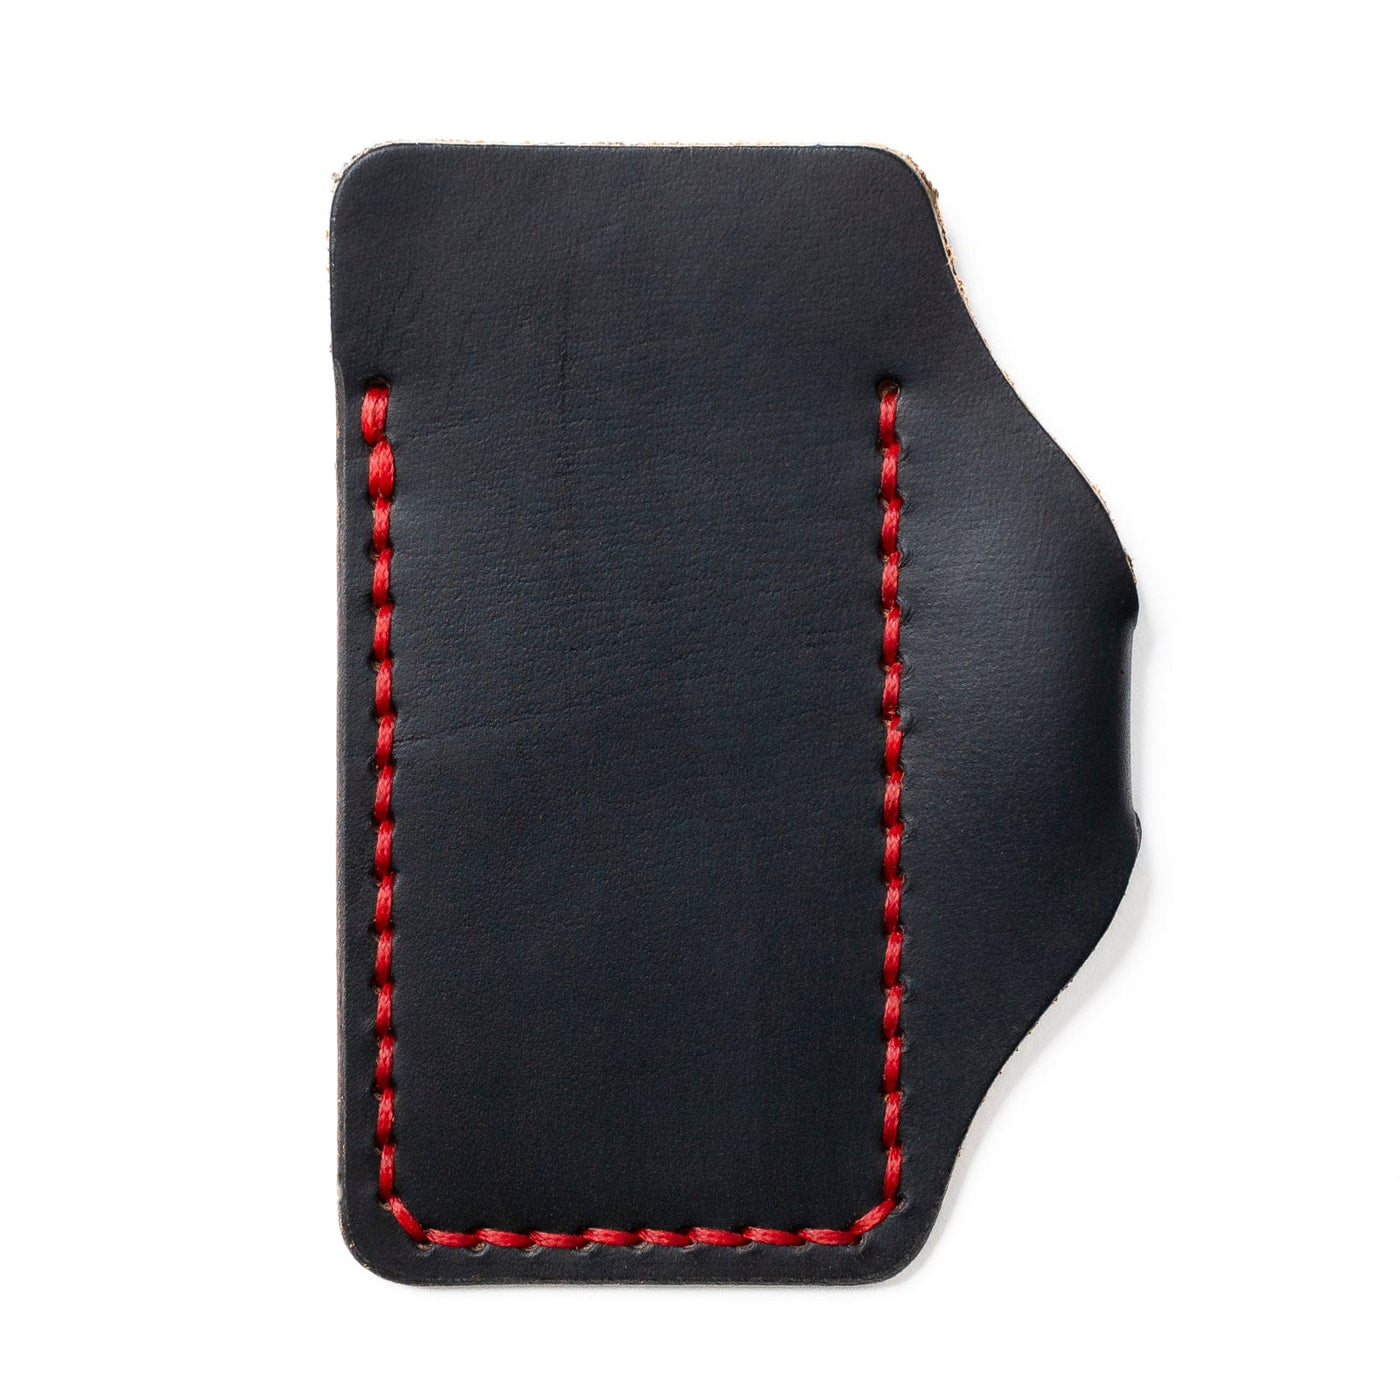 Leather EDC Pocket Armor - Black Popov Leather